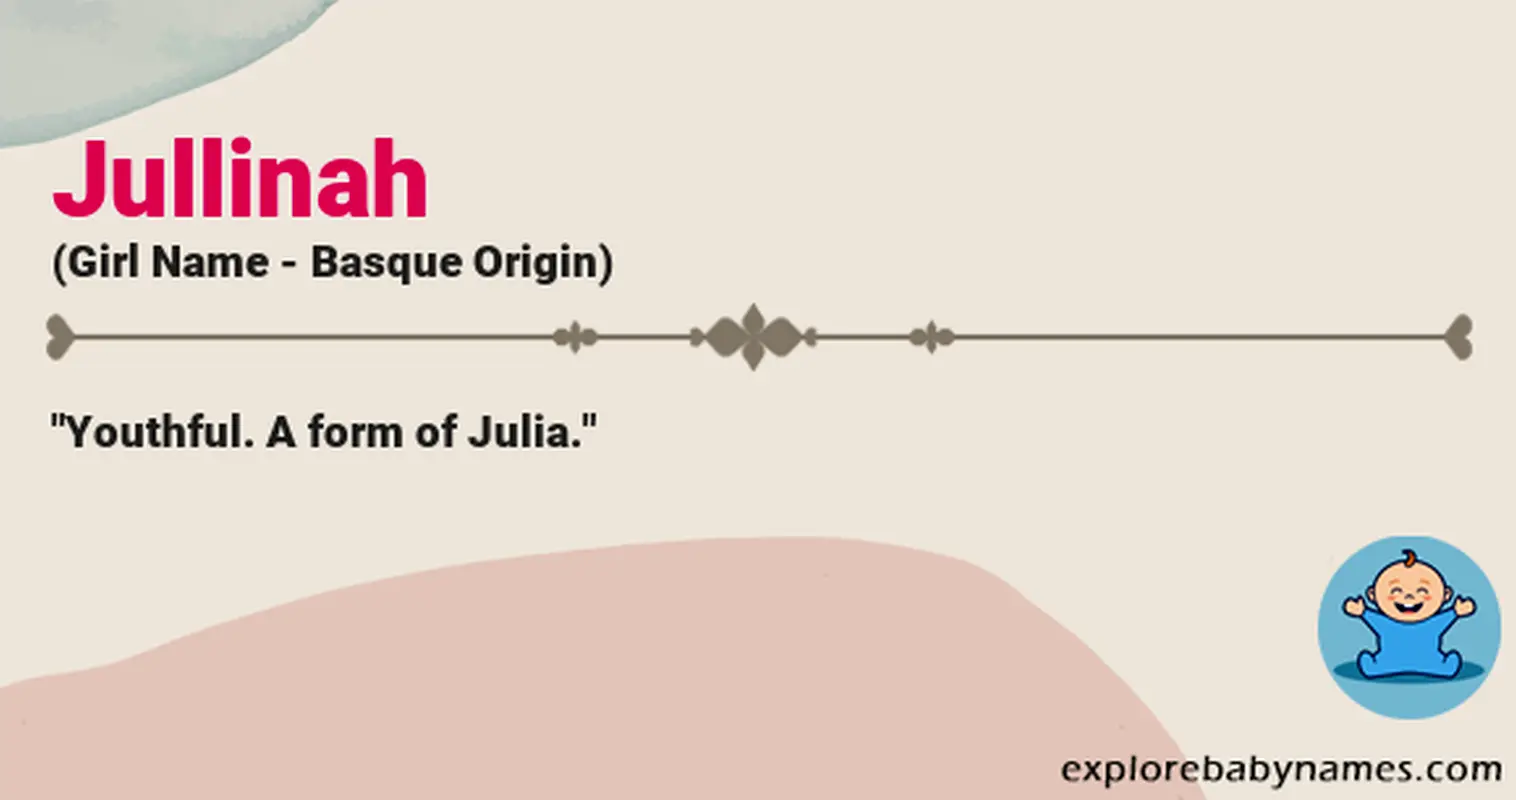 Meaning of Jullinah